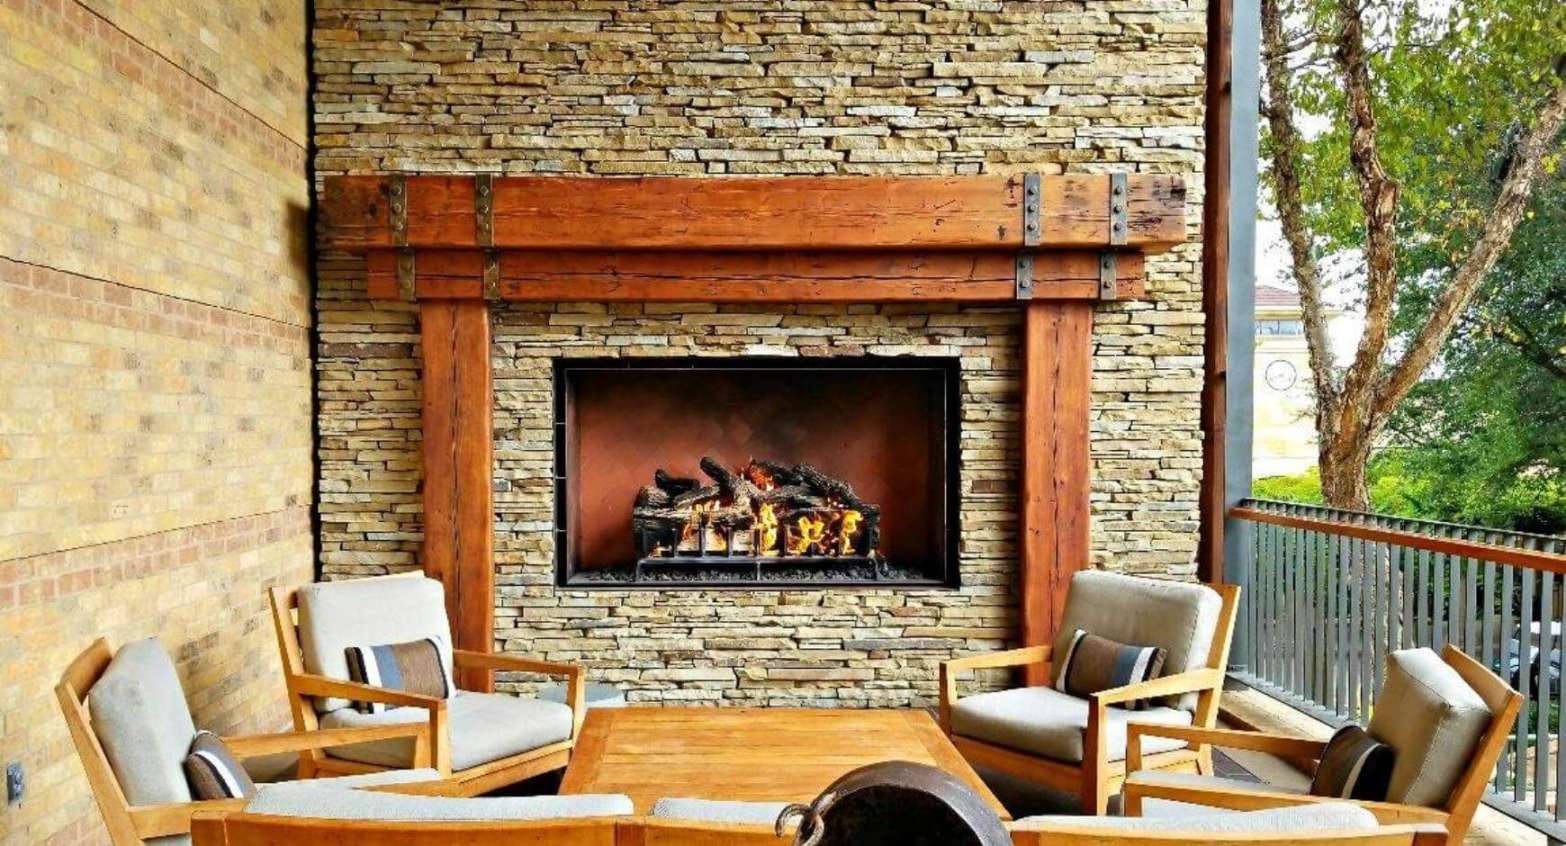 Cozy Cabin Fireplace Ideas - Acucraft Fireplaces